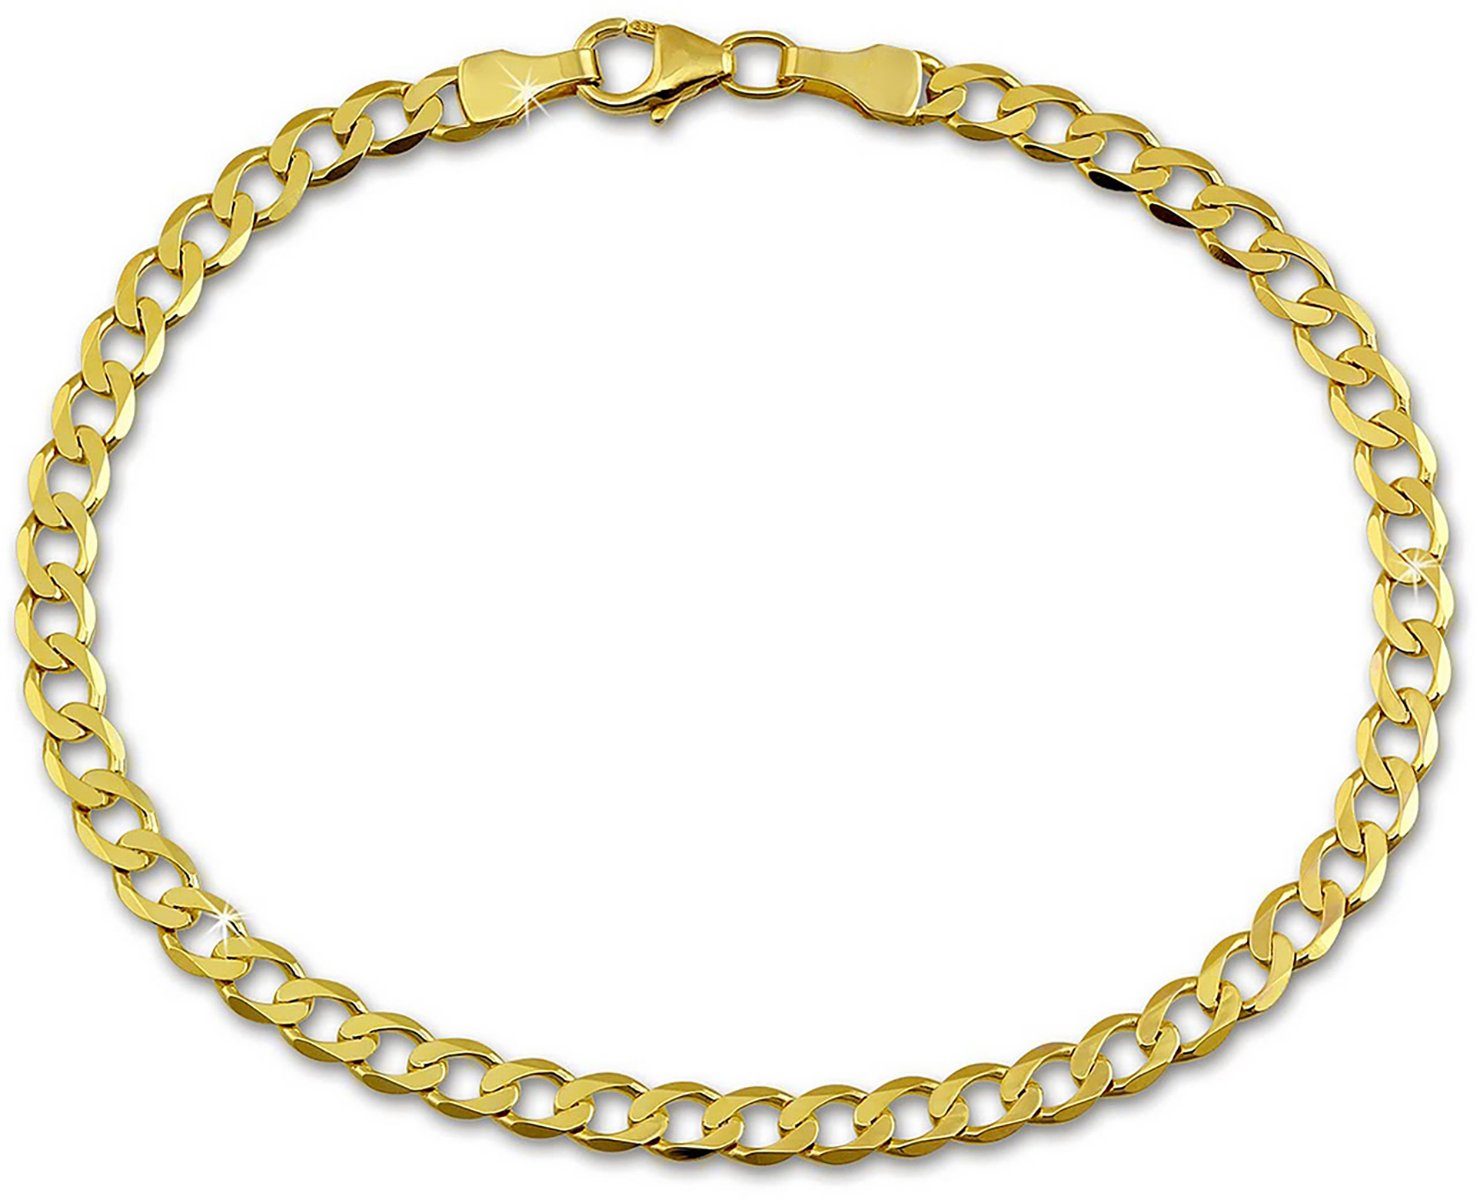 GoldDream Goldarmband GoldDream 19cm, Damen, Armband Damen Herren 8 Armband Karat, Gelbgold (Panzer) ca. - Herren (Armband), Farbe 19cm 333